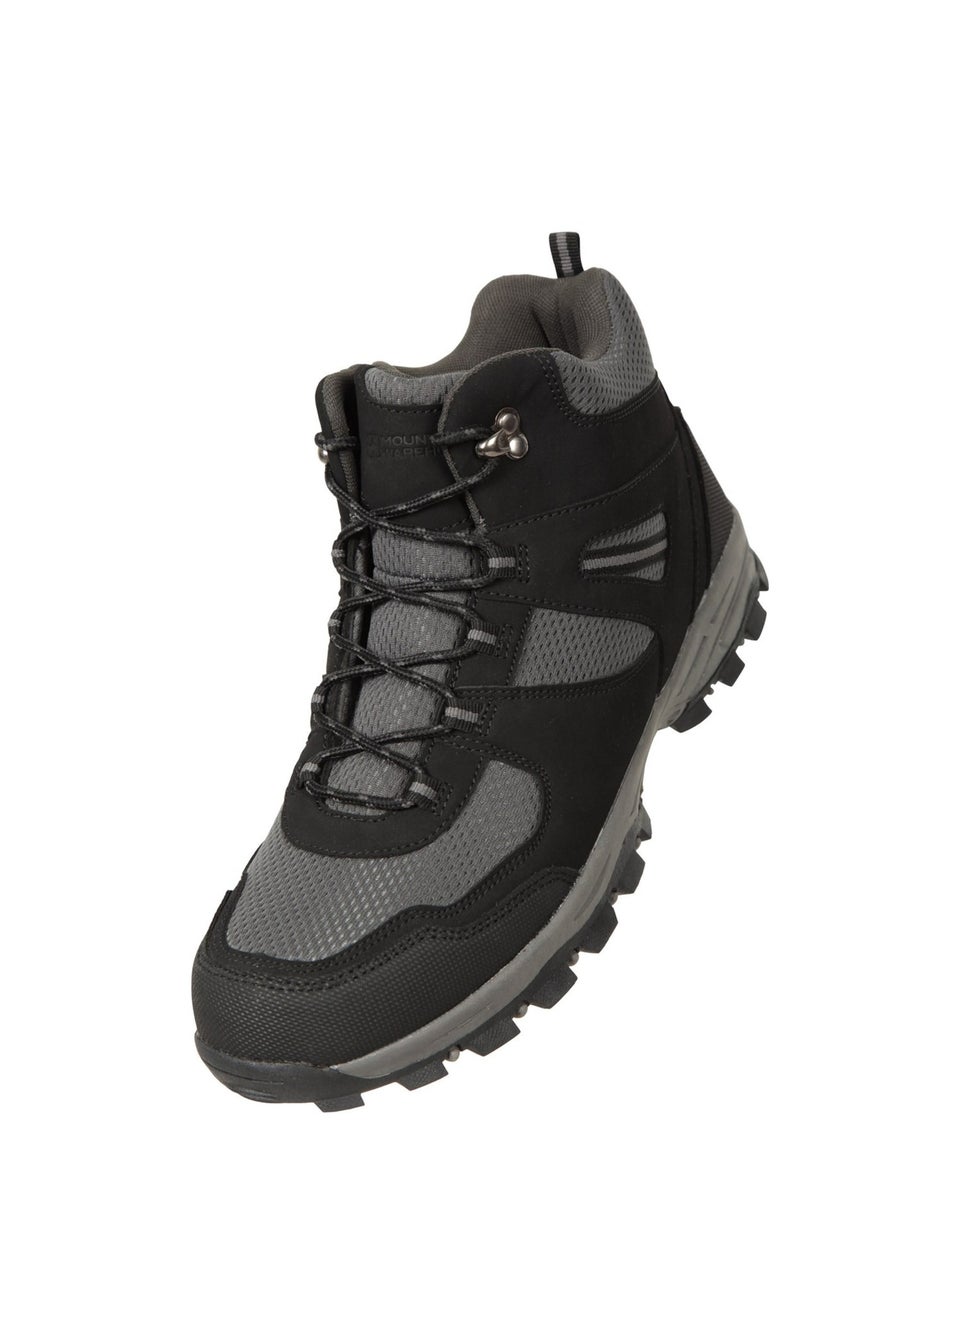 Mountain Warehouse Black Mcleod Wide Walking Boots